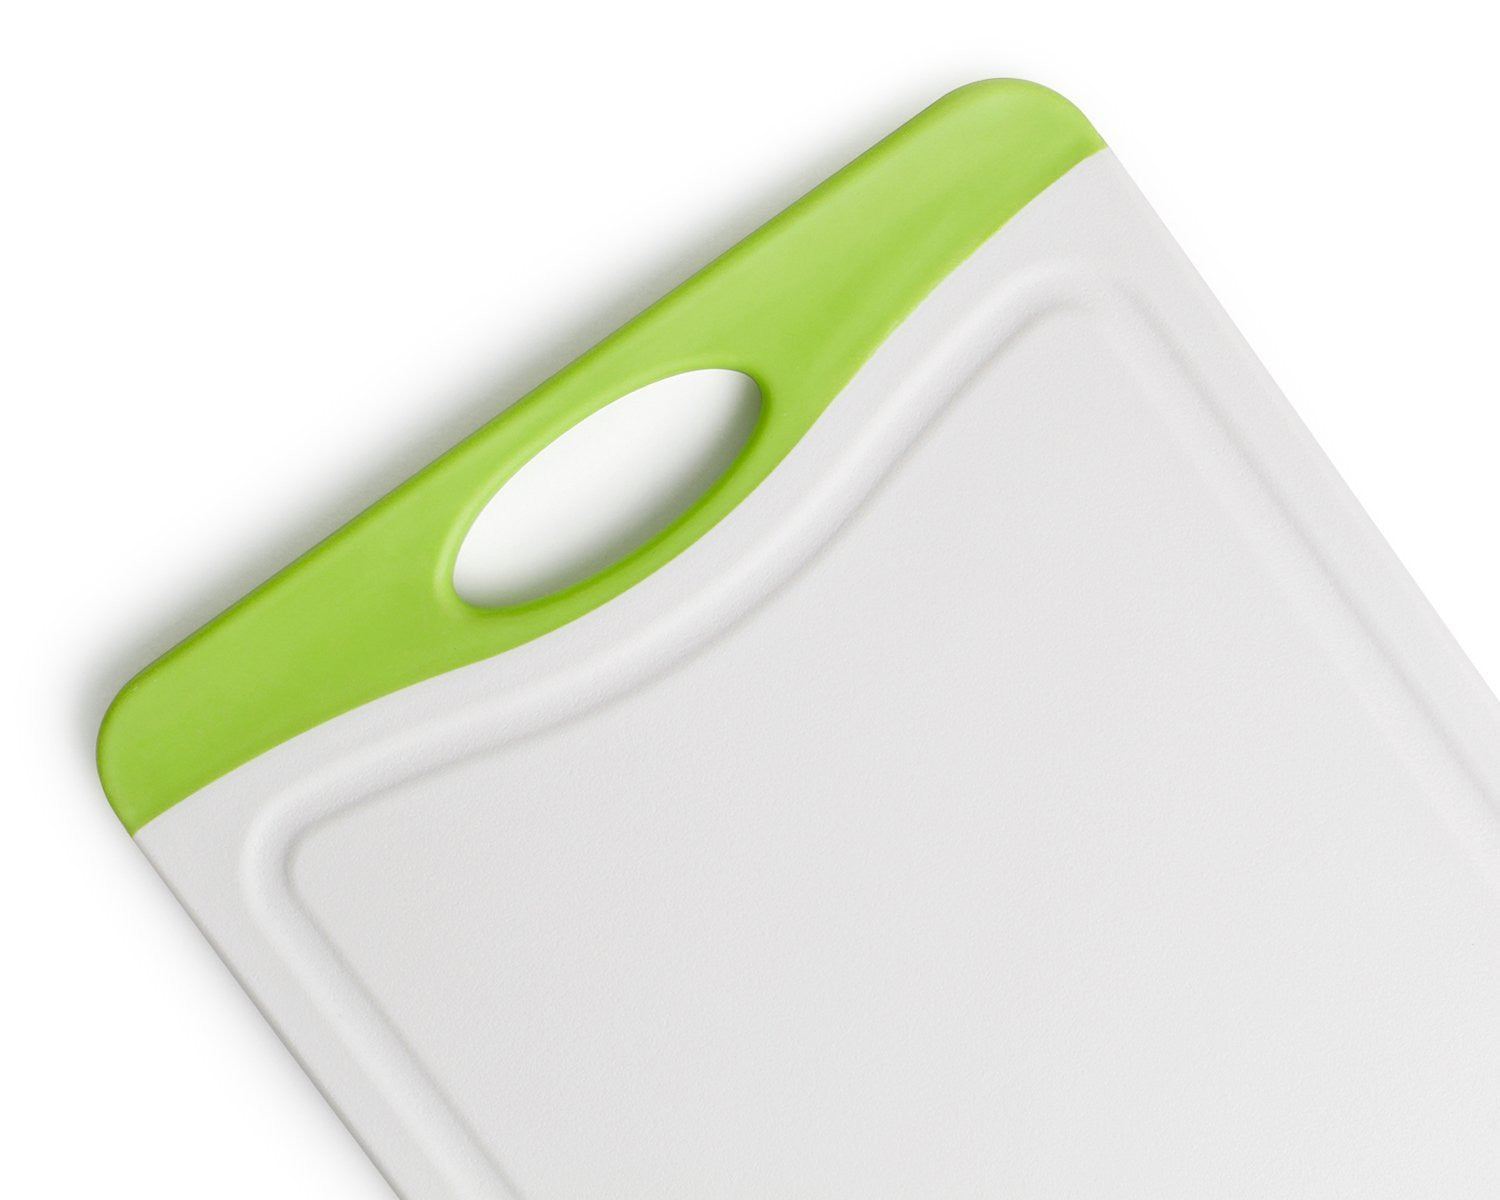 NEOFLAM Antibacterial Cutting Board, 17.5 X 12, Dishwasher Safe, BPA Free